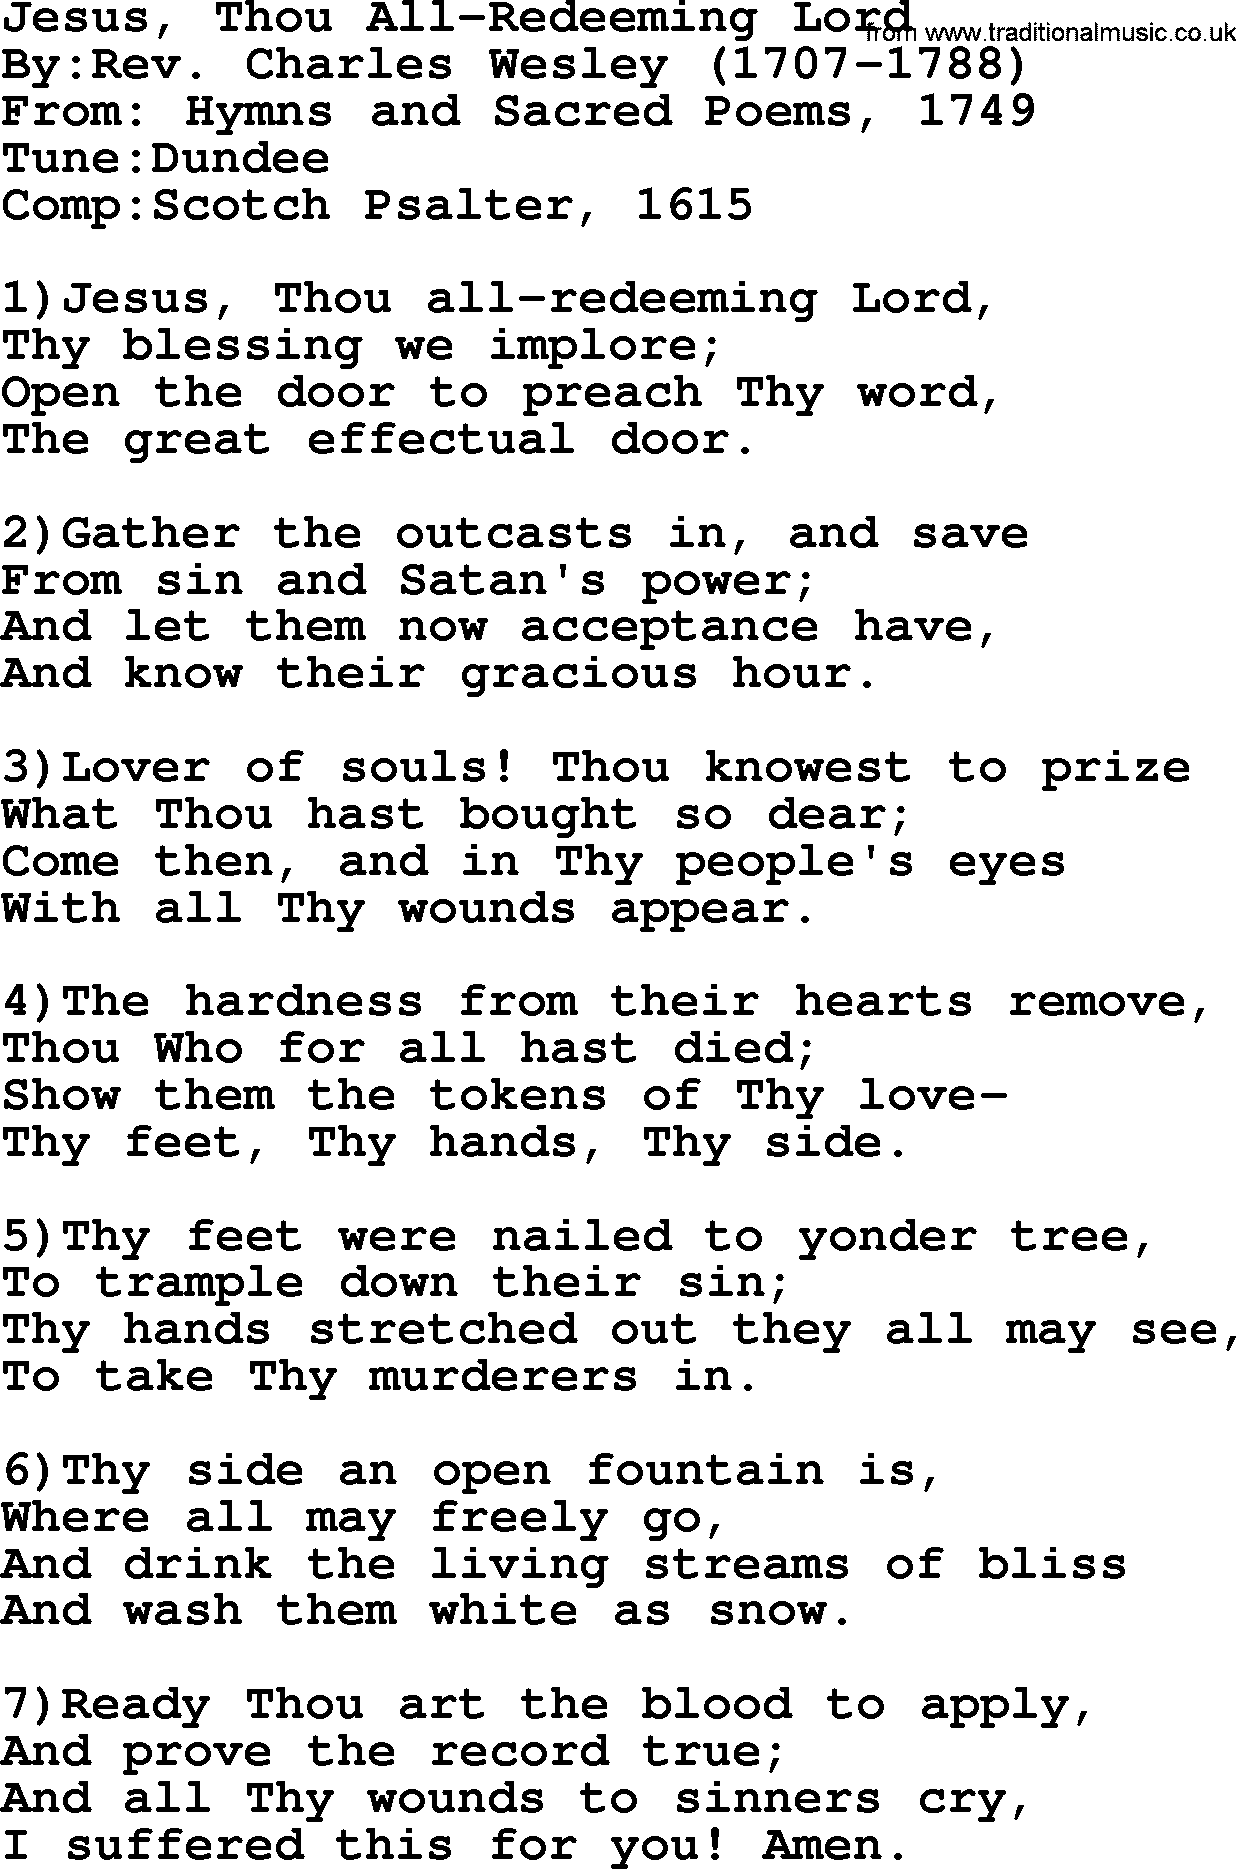 Methodist Hymn: Jesus, Thou All-redeeming Lord, lyrics